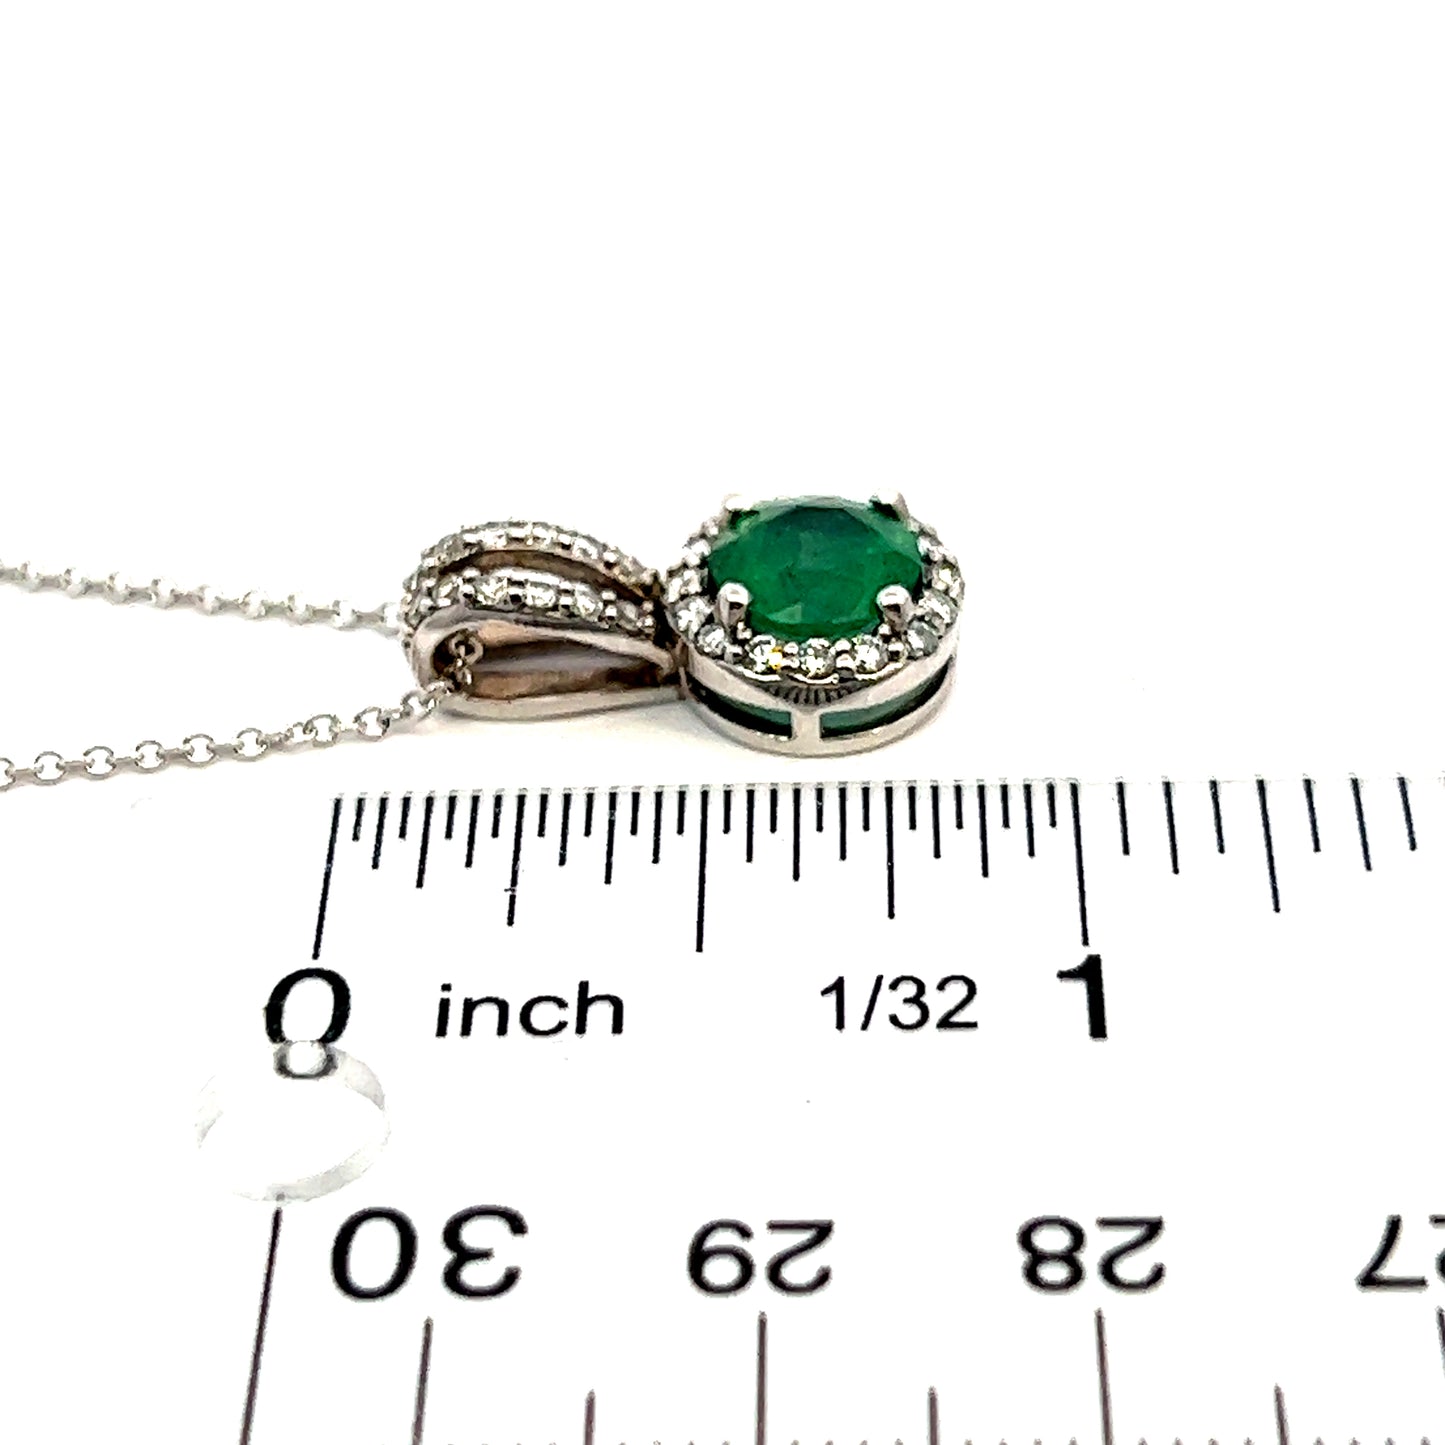 Natural Emerald Diamond Pendant Necklace 18" 14k W Gold 1.84 TCW Certified $5,950 215428 - Certified Fine Jewelry